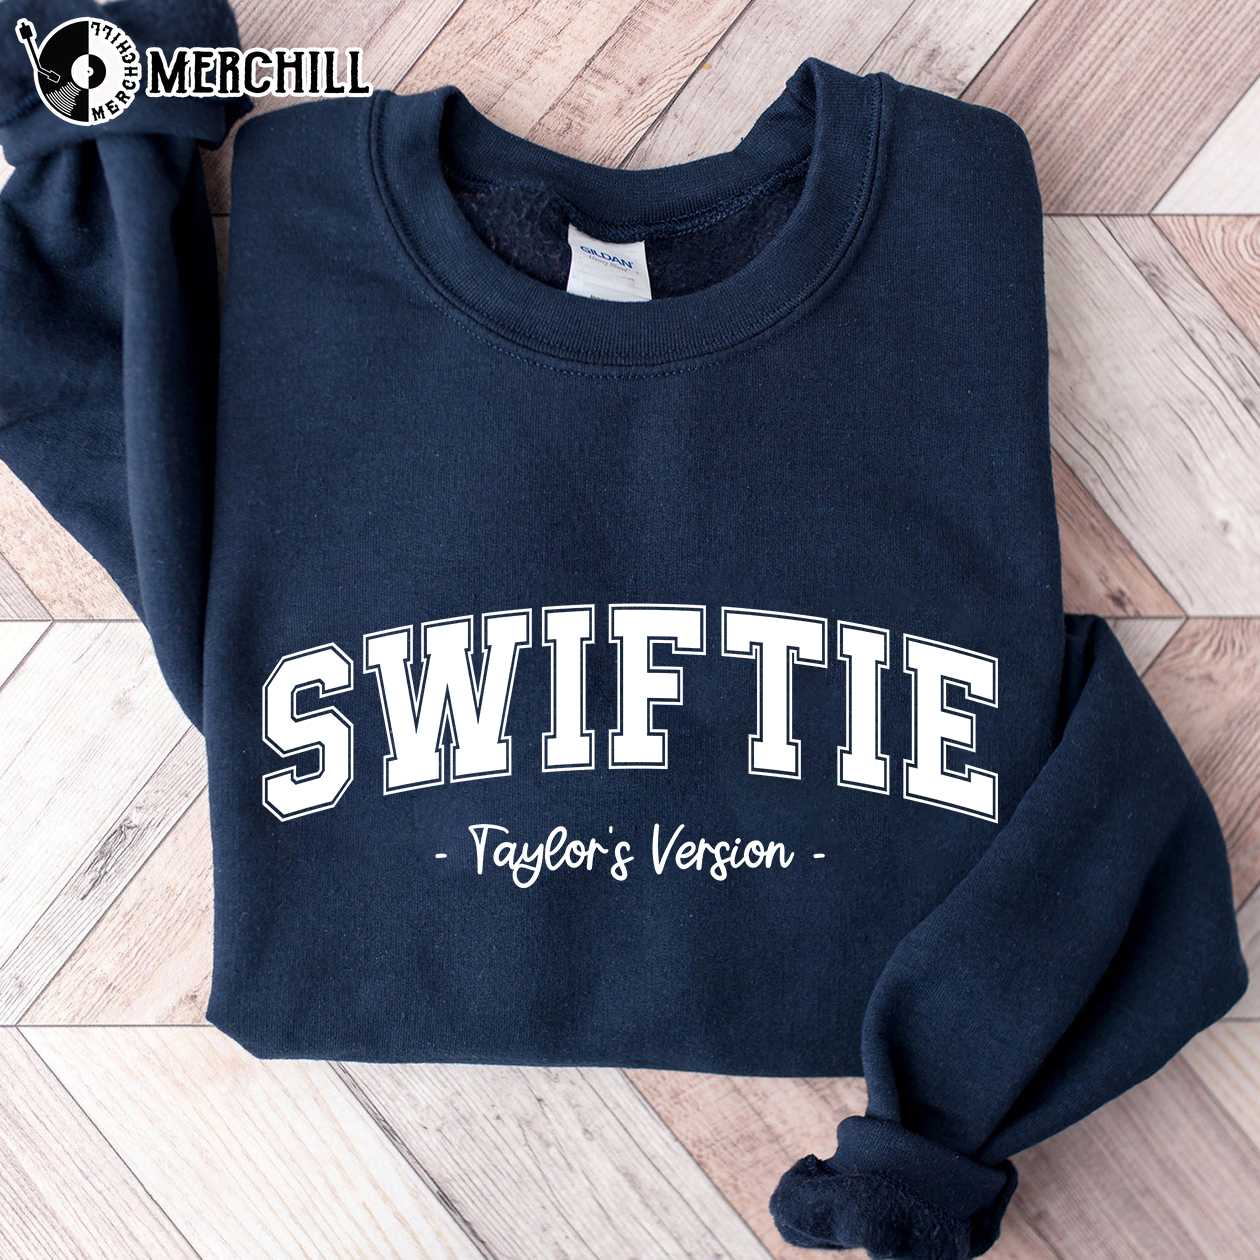 Unisex Vintage Shirt Taylor Swiftie Merch Tshirt Taylor Swiftie Merch  Taylor Swifty Merch Taylor Swifty Merch Tshirt